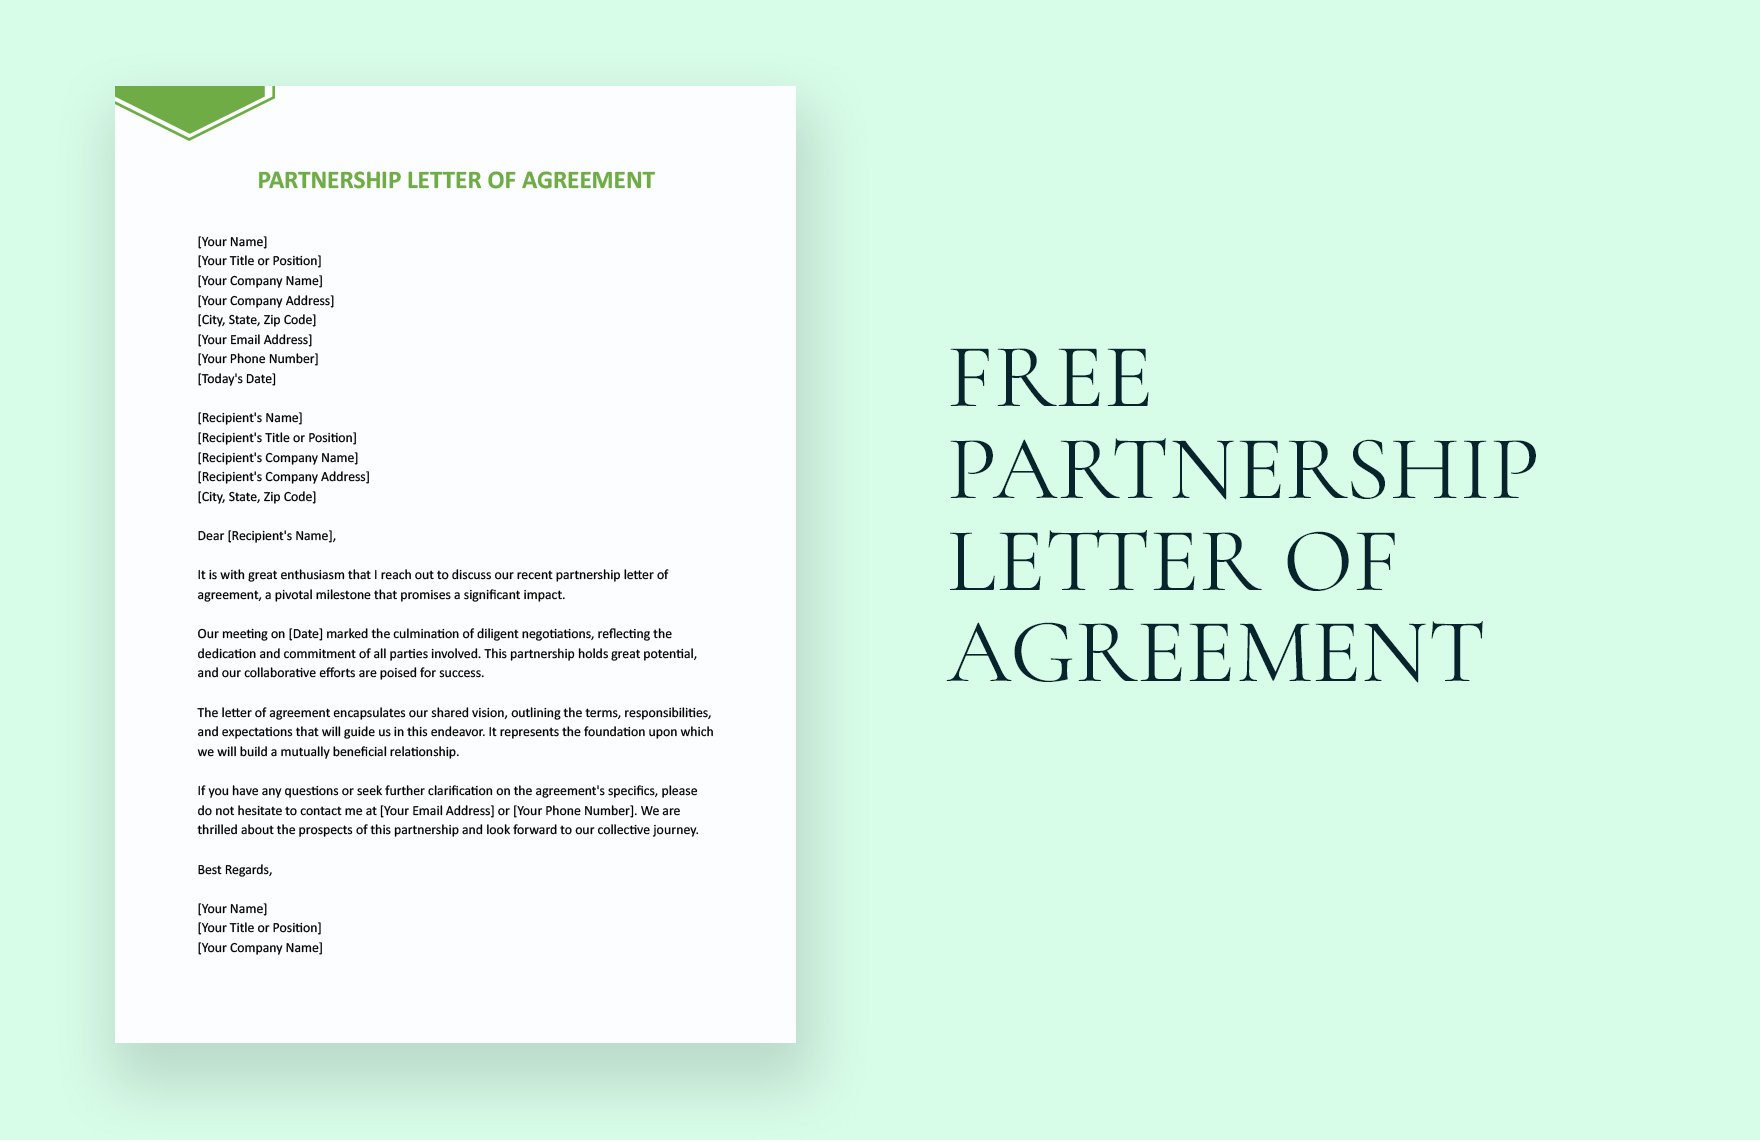 Free Partnership Letter Of Agreement